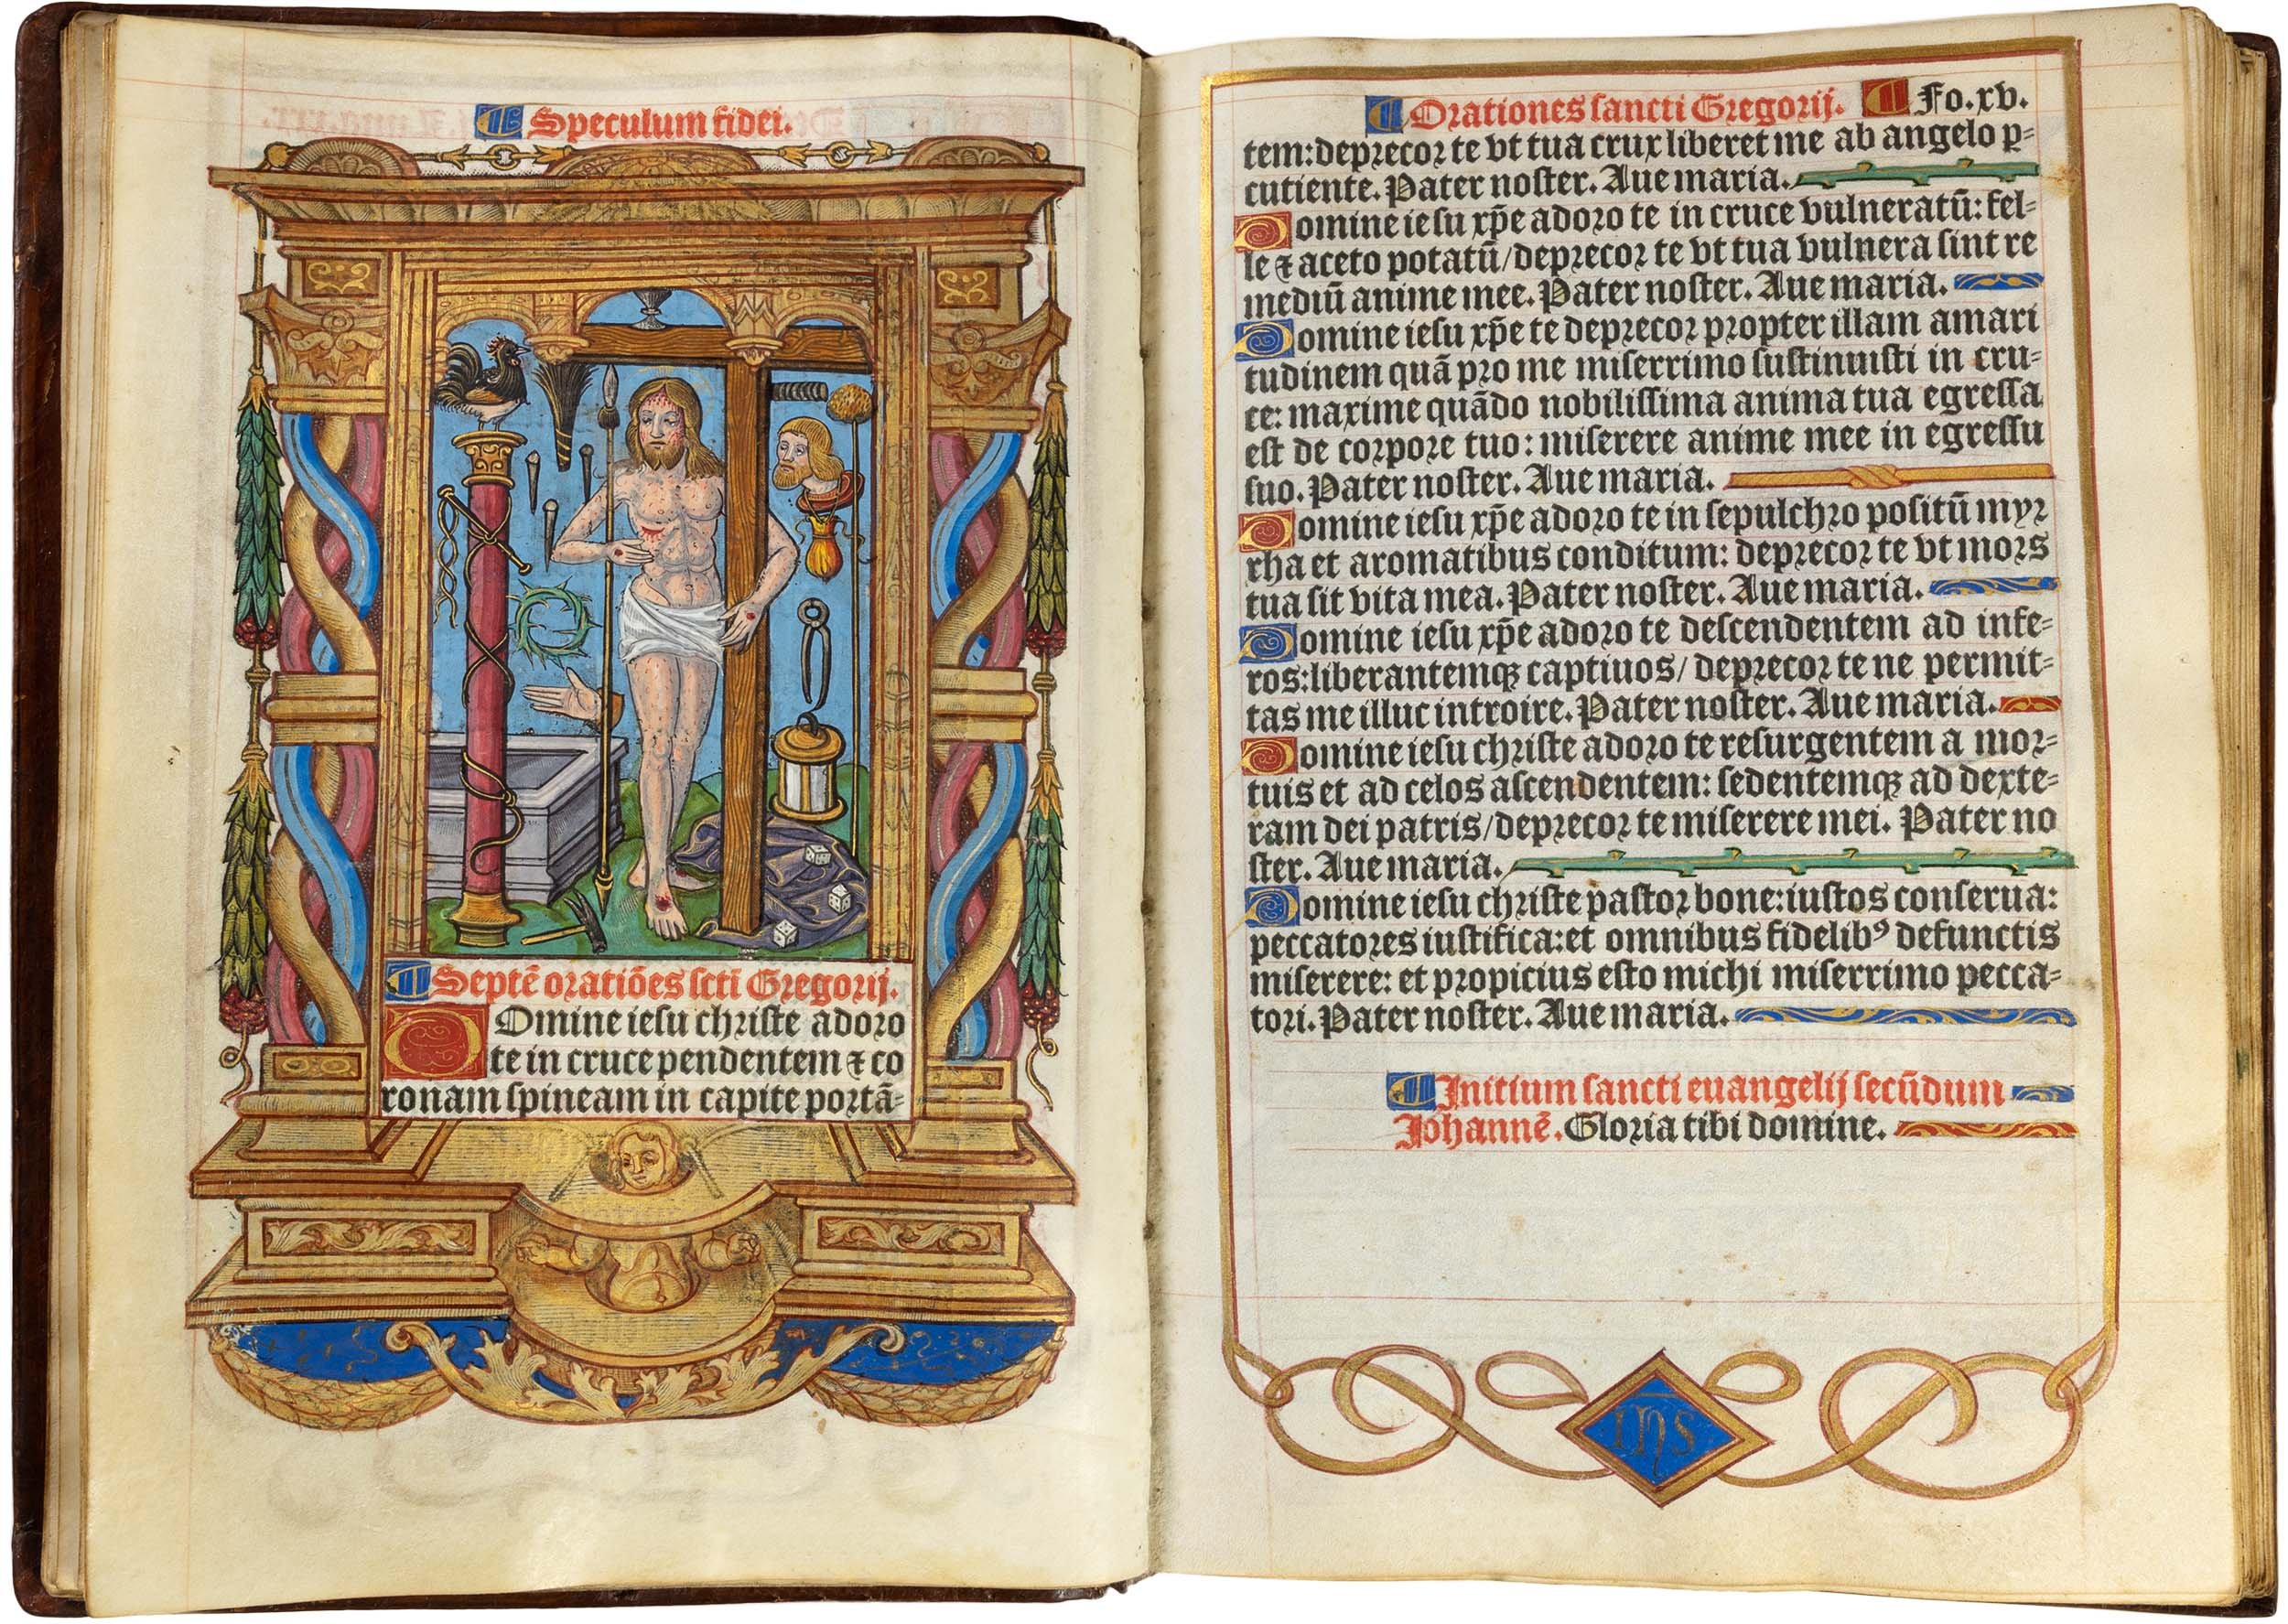 Printed-Book-of-hours-Anne-de-Montmorency-16-february-1523-kerver-yolande-bonhomme-illuminated-vellum-copy-17.jpg